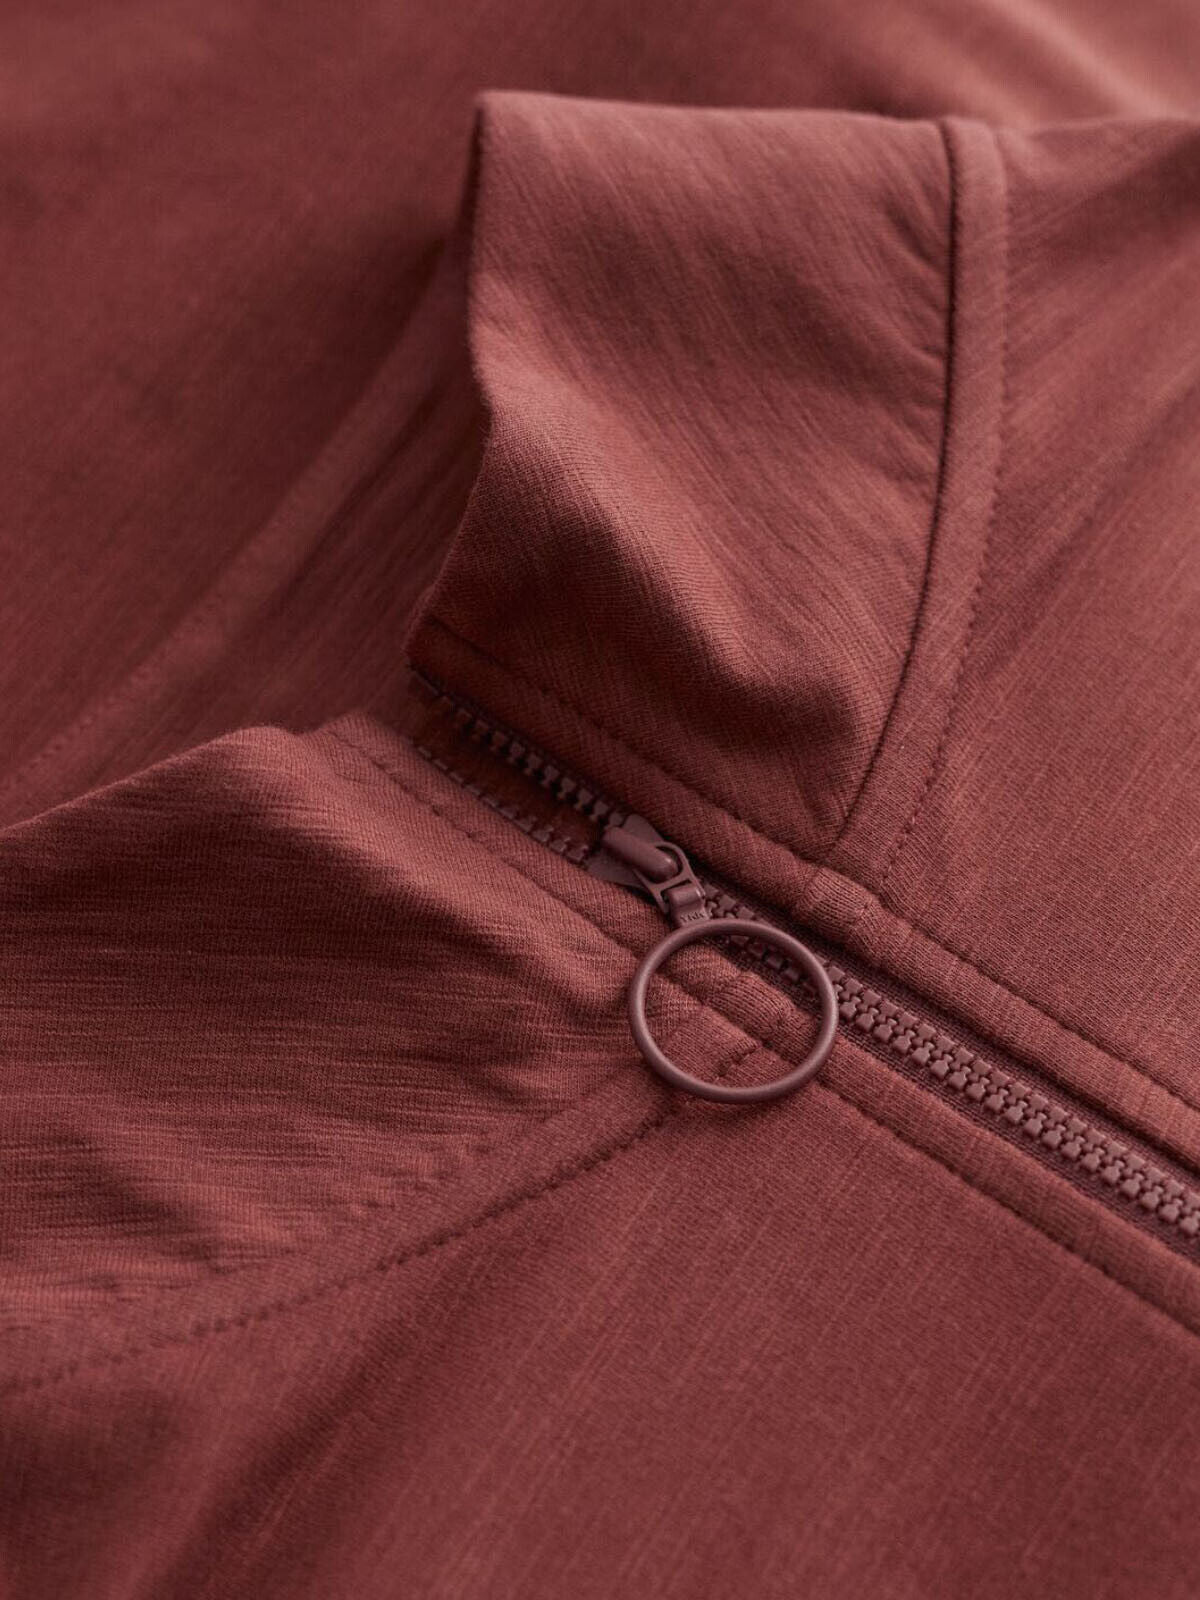 EX Seasalt Red Circle Half Zip Sweatshirt Oilcloth in Sizes 10, 18, 20 RRP £55